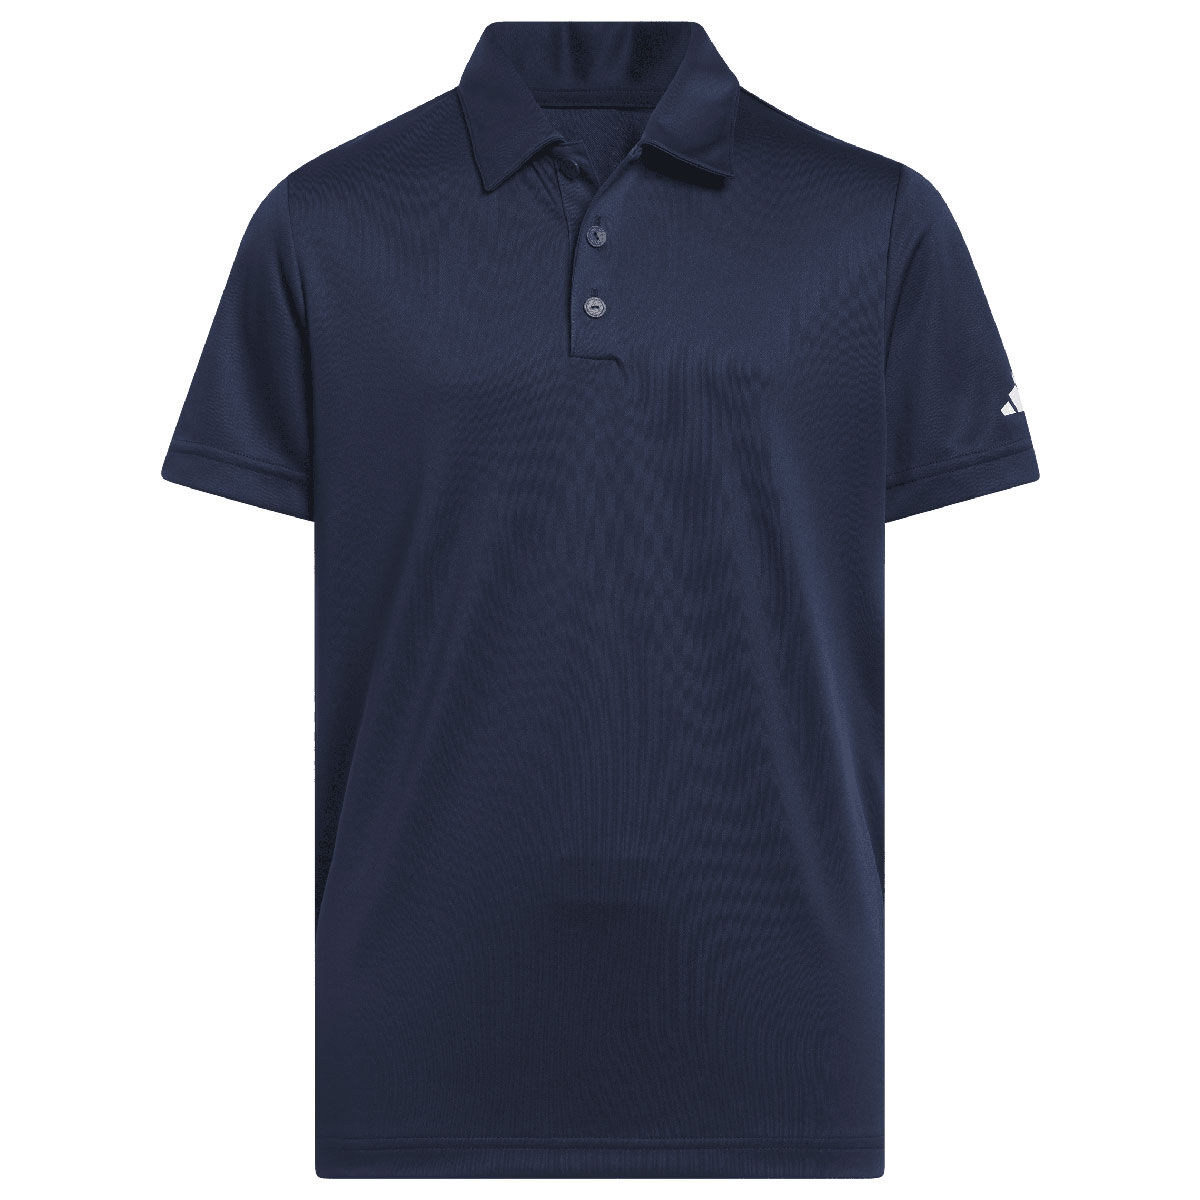 adidas Junior Performance Golf Polo Shirt, Unisex, Collegiate navy, 11-12 years | American Golf